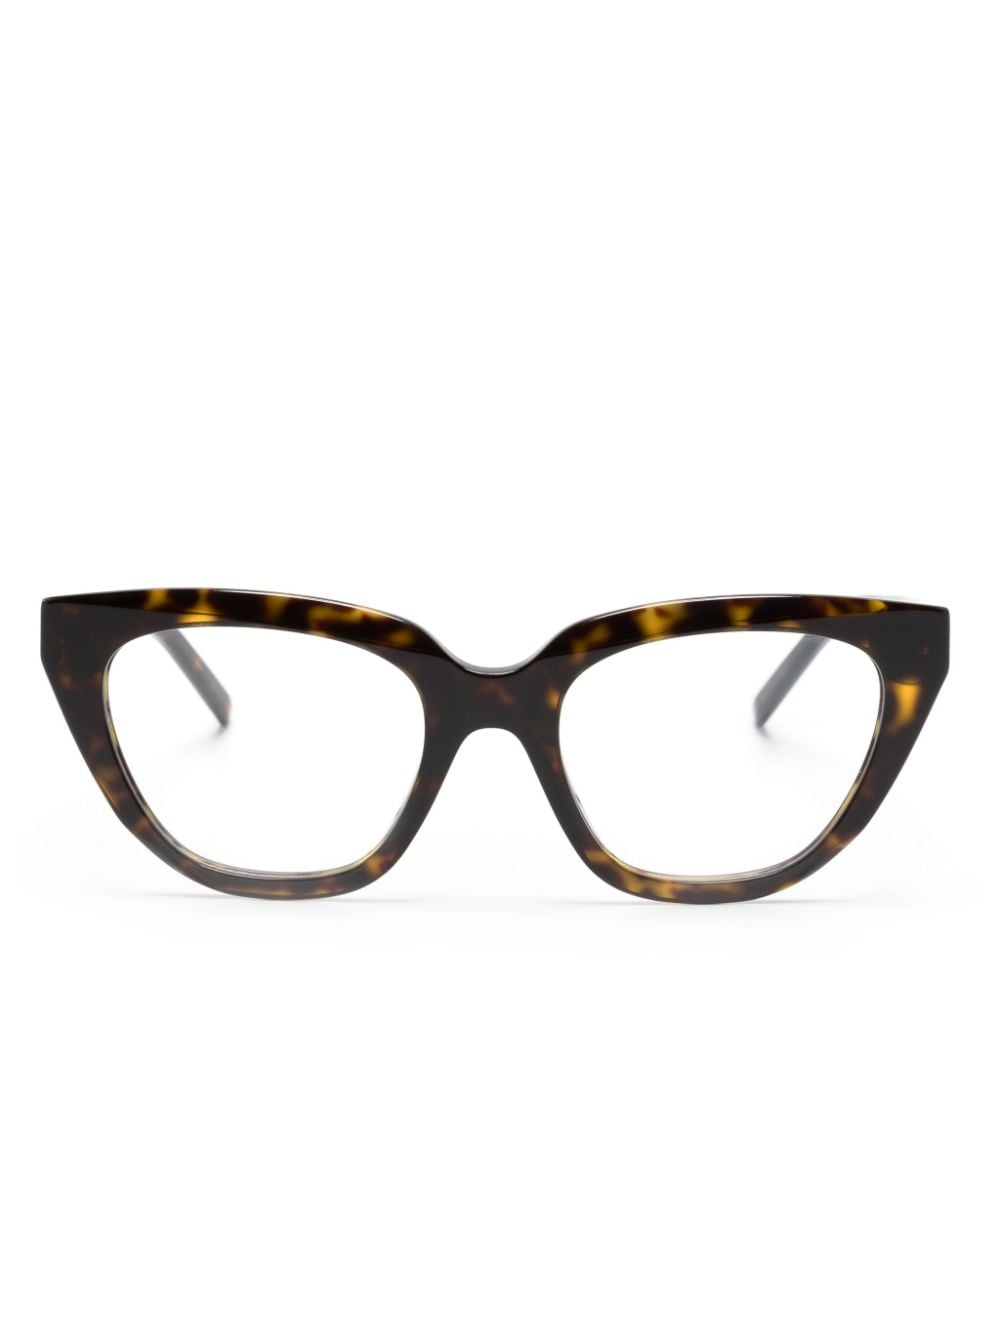 Givenchy Tortoiseshell Cat-eye Glasses In Brown